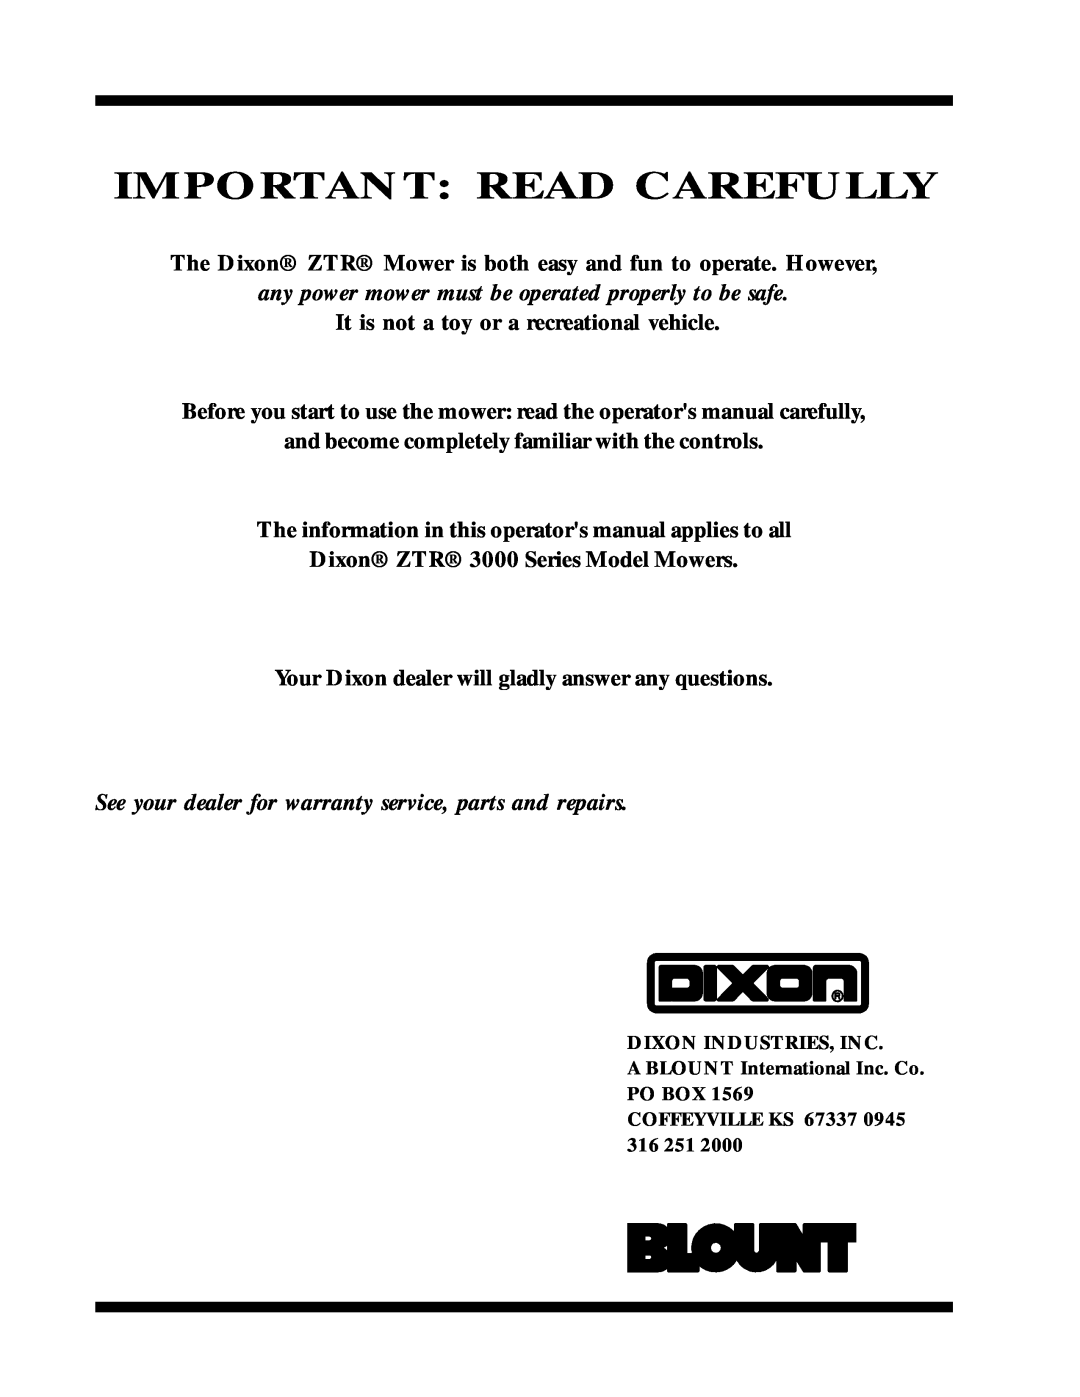 Dixon 1855-0599, ZTR 3303, ZTR 3304, 6520-1099 manual Important Read Carefully 